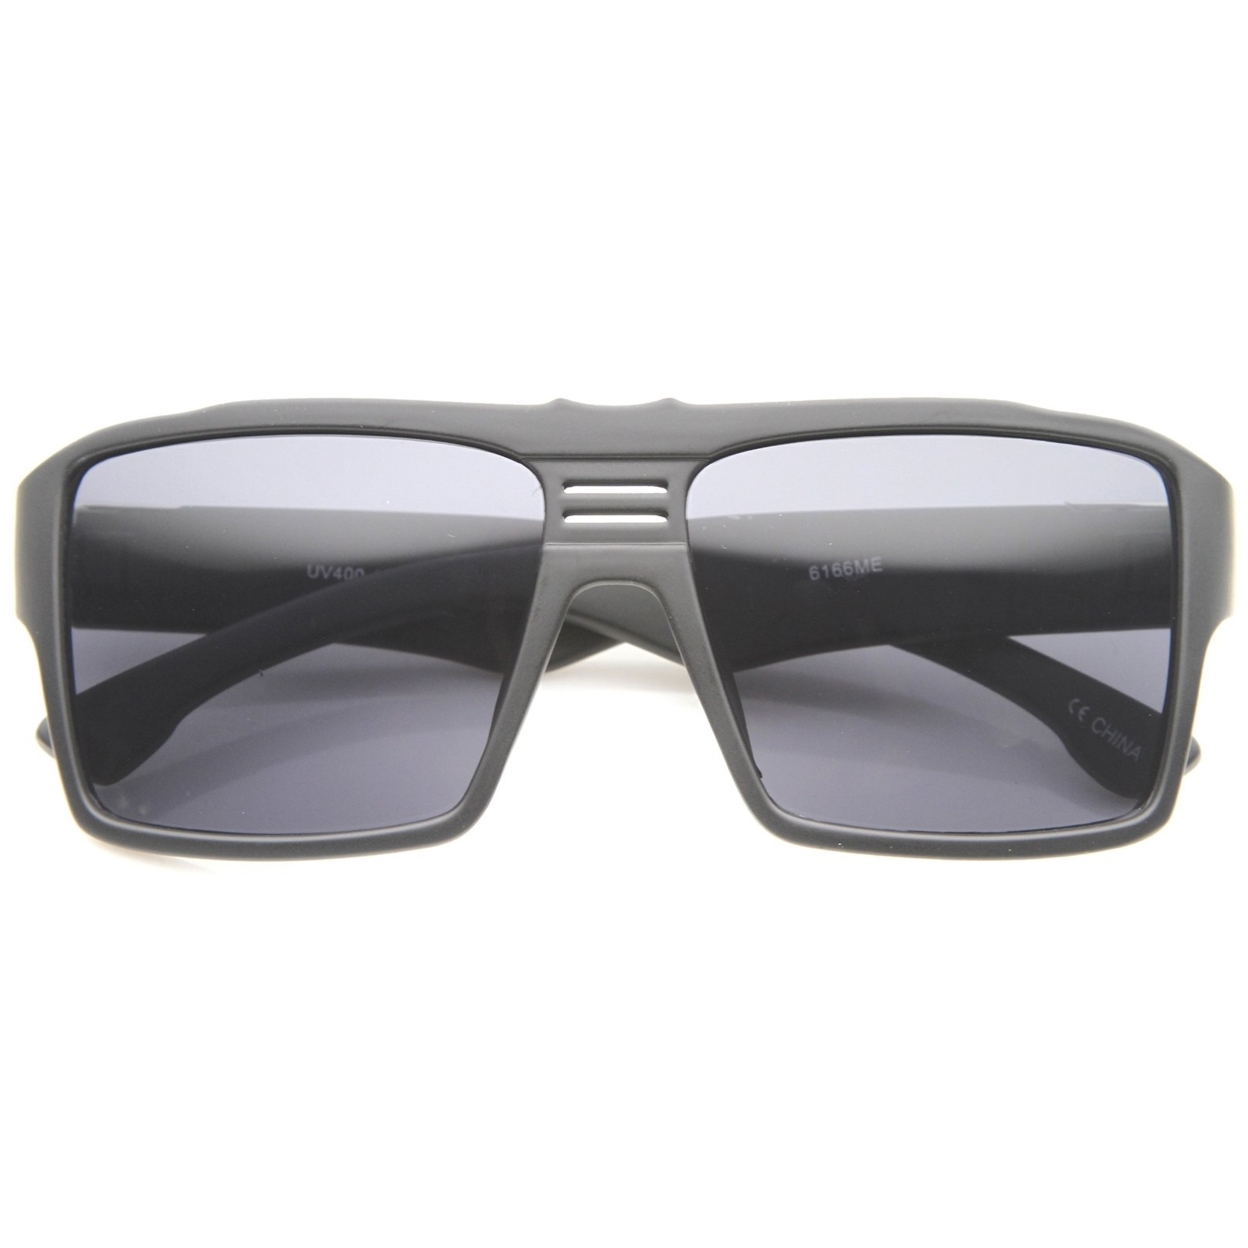 Men's Modern Casual Flat Top Wide Temple Rectangle Aviator Sunglasses 57mm - Tortoise / Brown